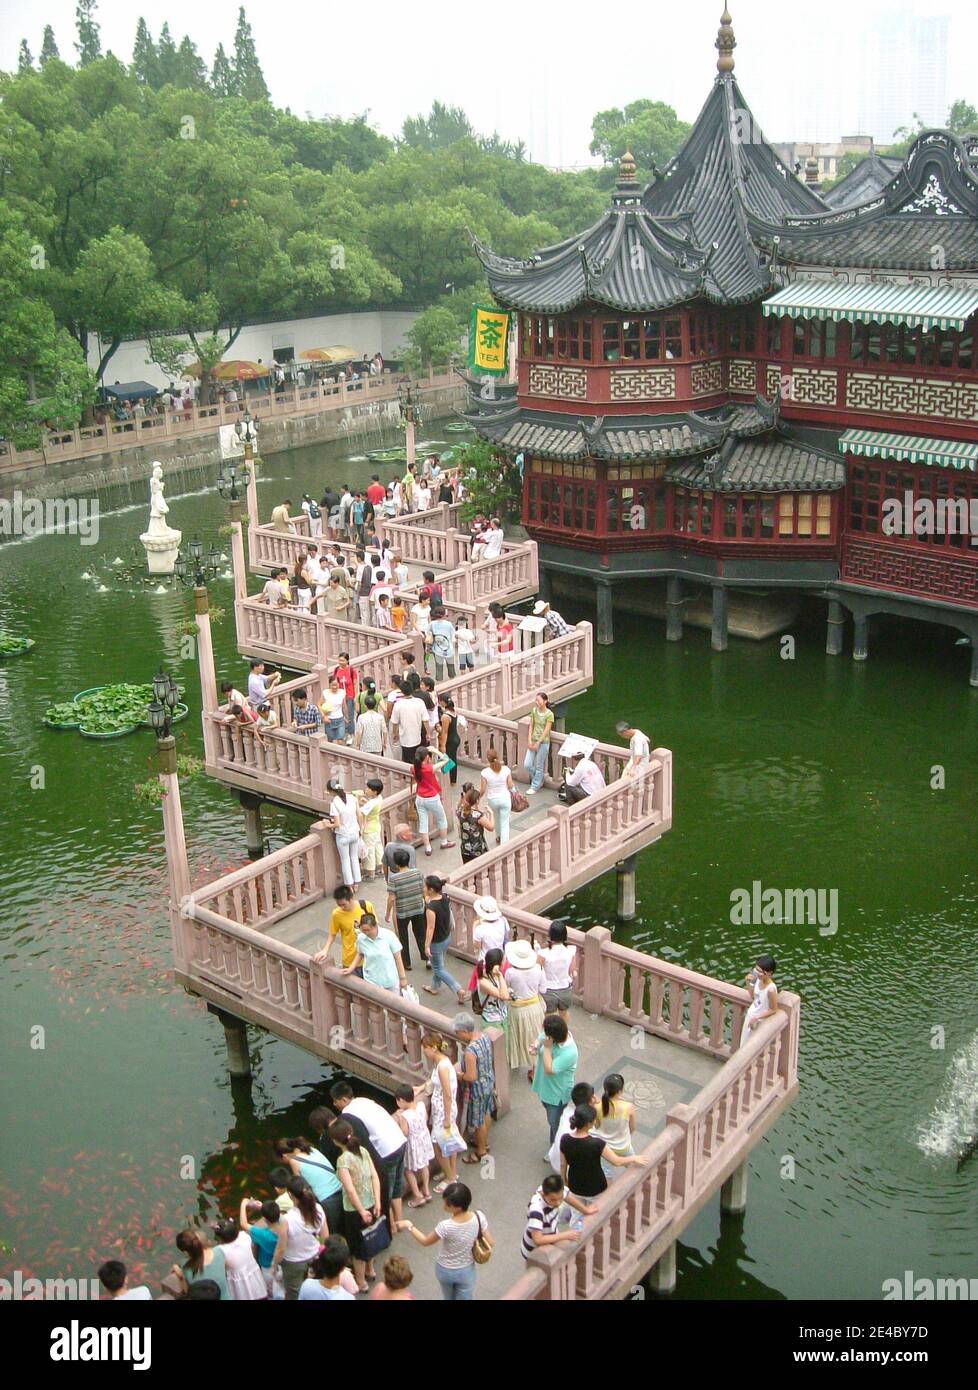 Il ponte a nove zigzag e Teahhouse, il giardino Yu (Yuyuan), Huangpu Qu, Shanghai, Repubblica popolare Cinese Foto Stock